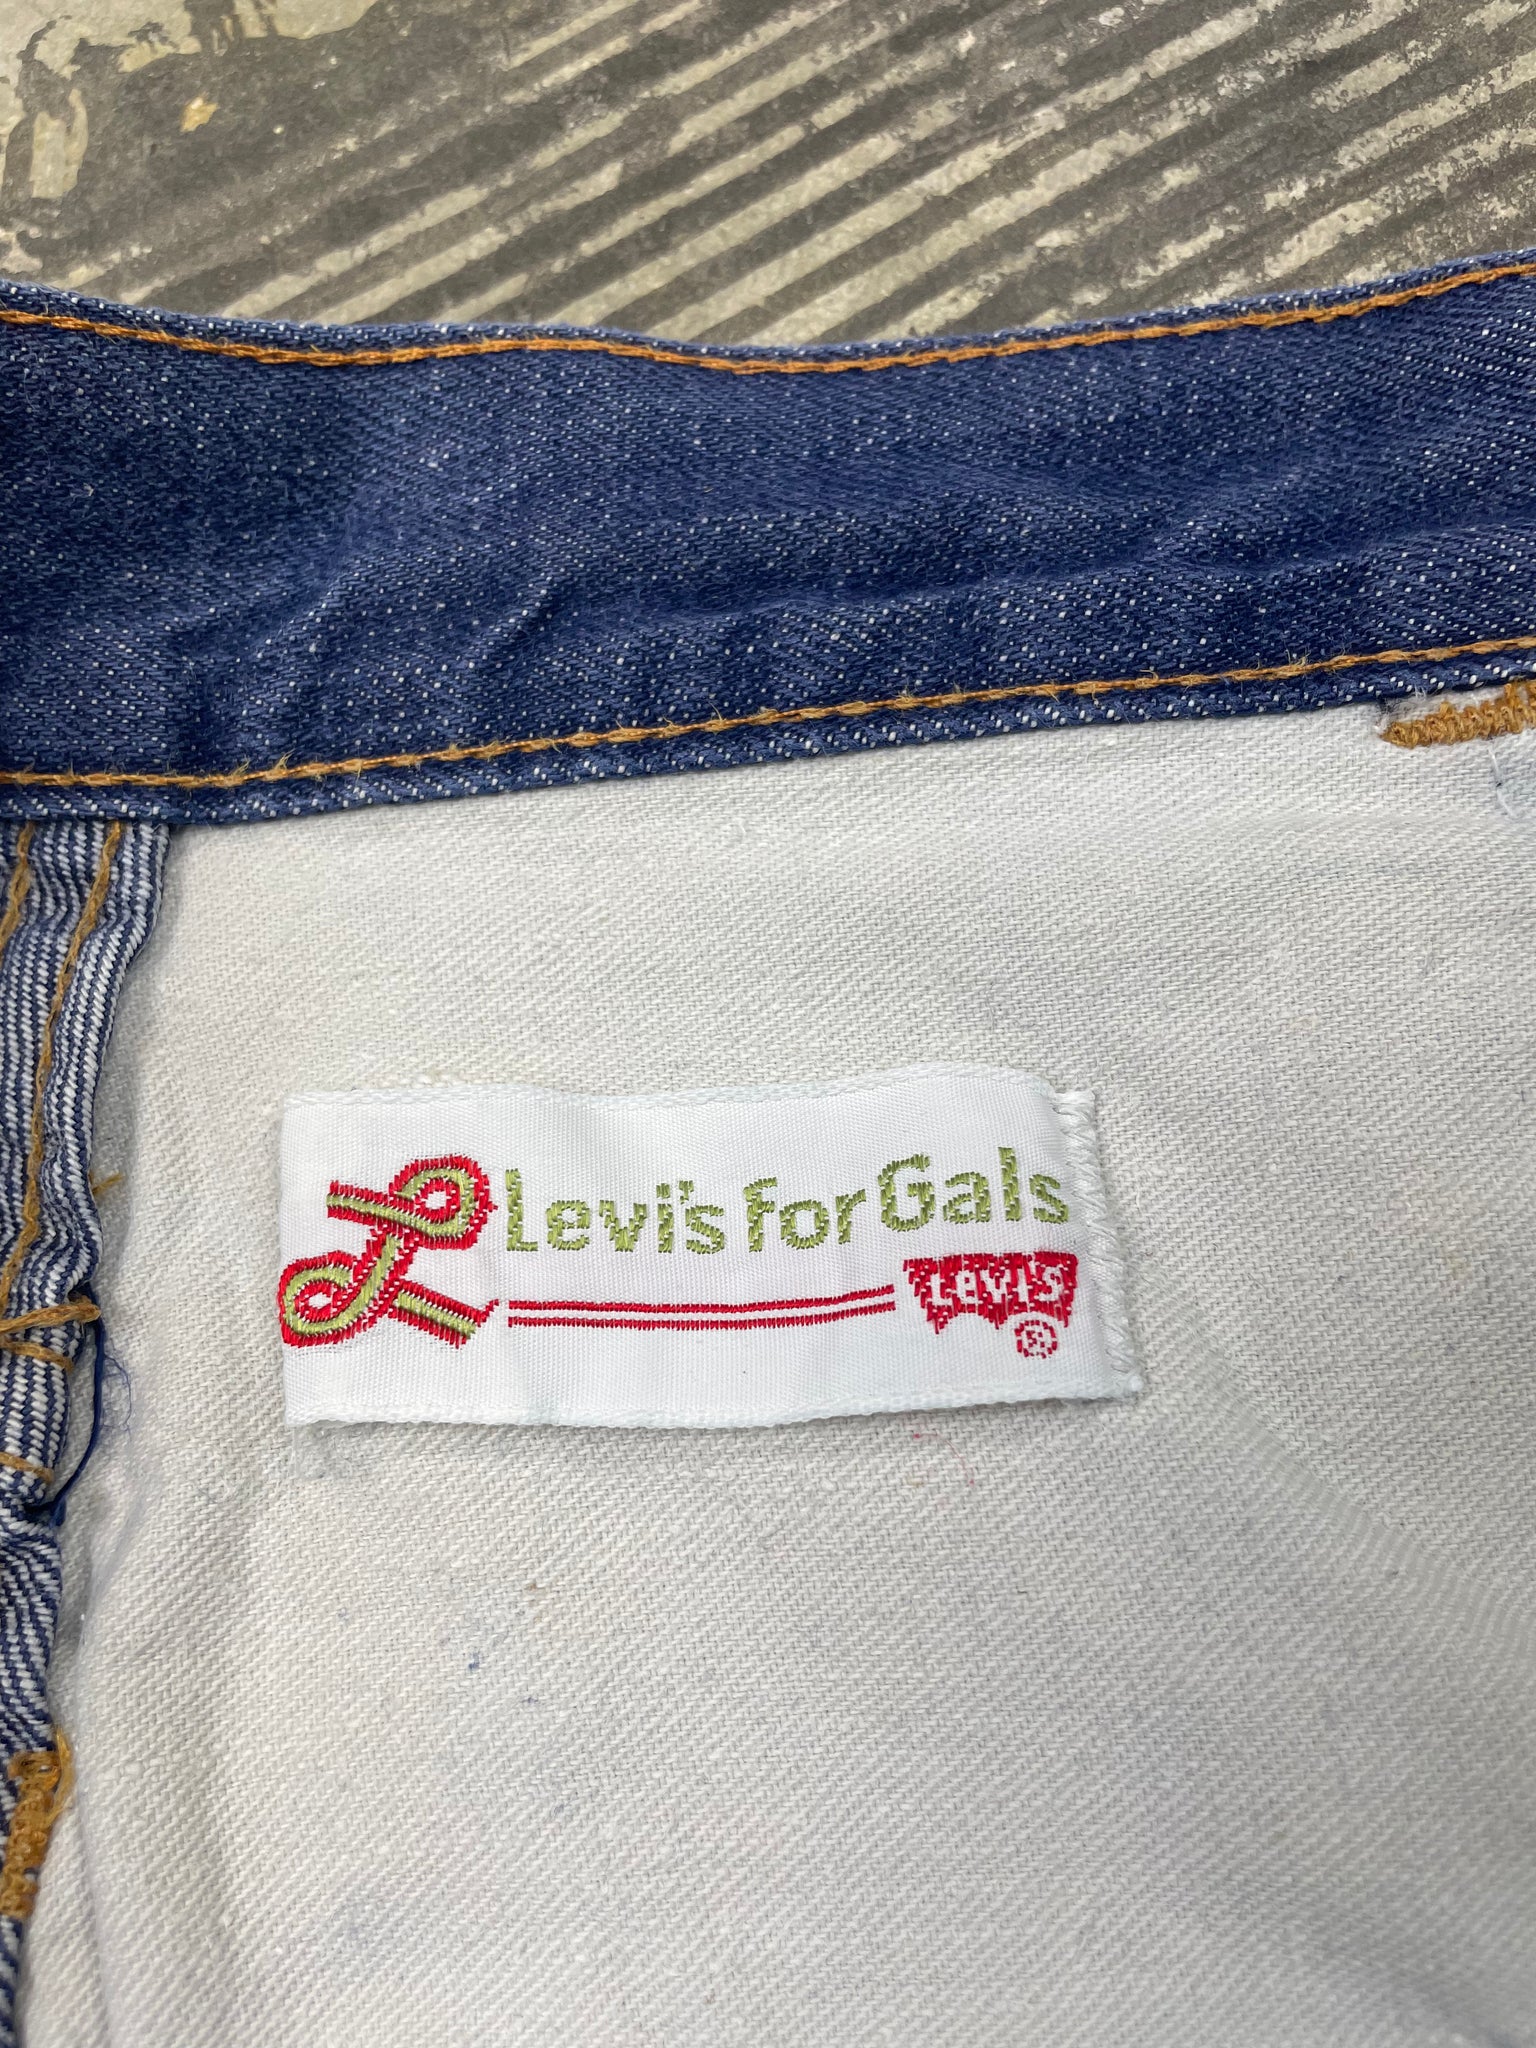 Vintage 1970's Levis For Gals "E" Denim Cutoff Shorts  (JYJ-132)